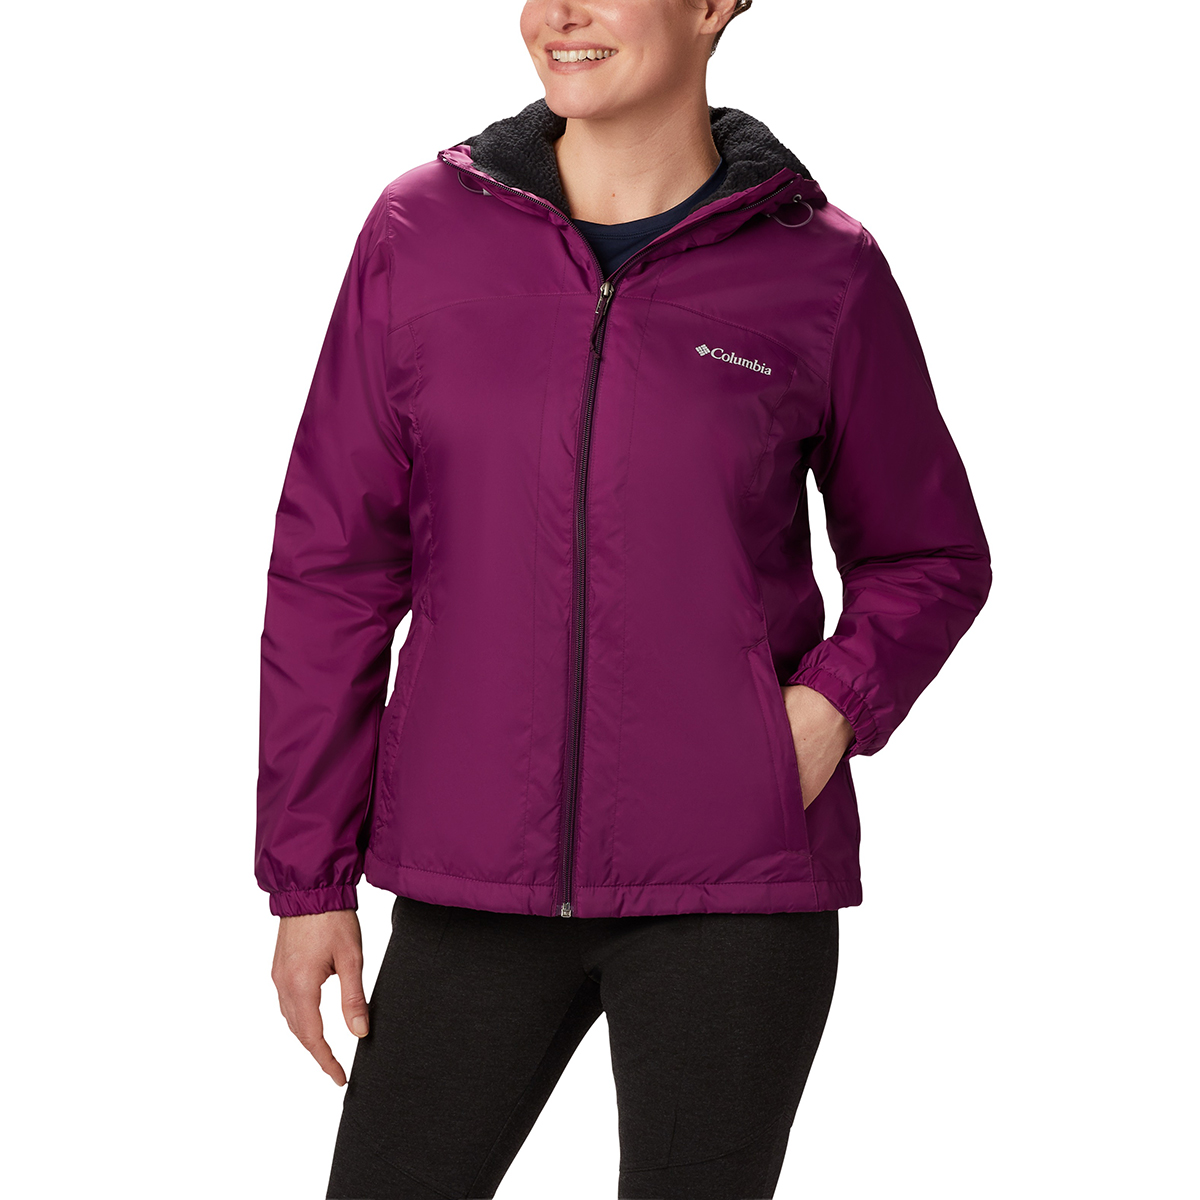 Columbia Women's Switchback Sherpa Lined Jacket - Purple, S